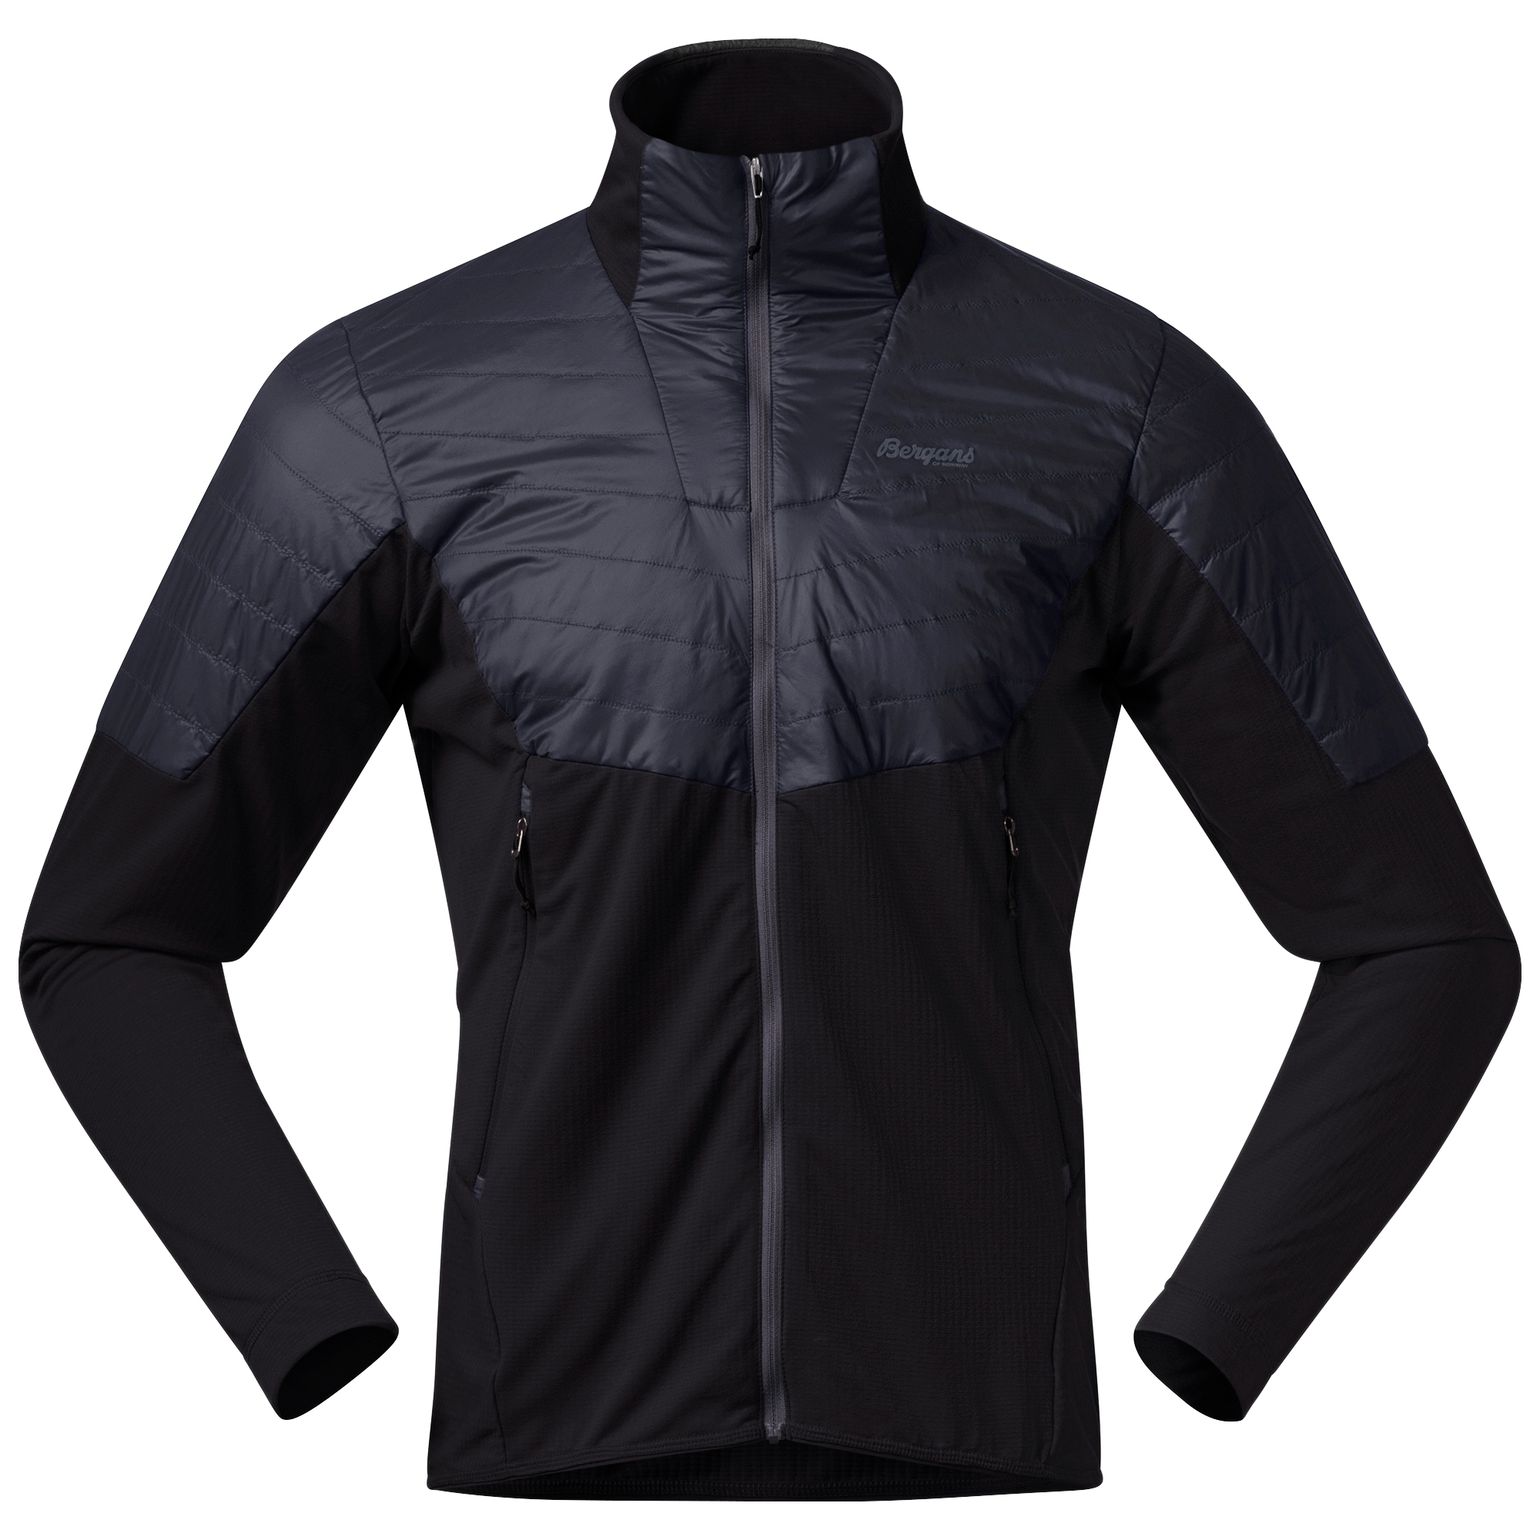 Men's Senja Midlayer Jacket  Black/Solid Charcoal